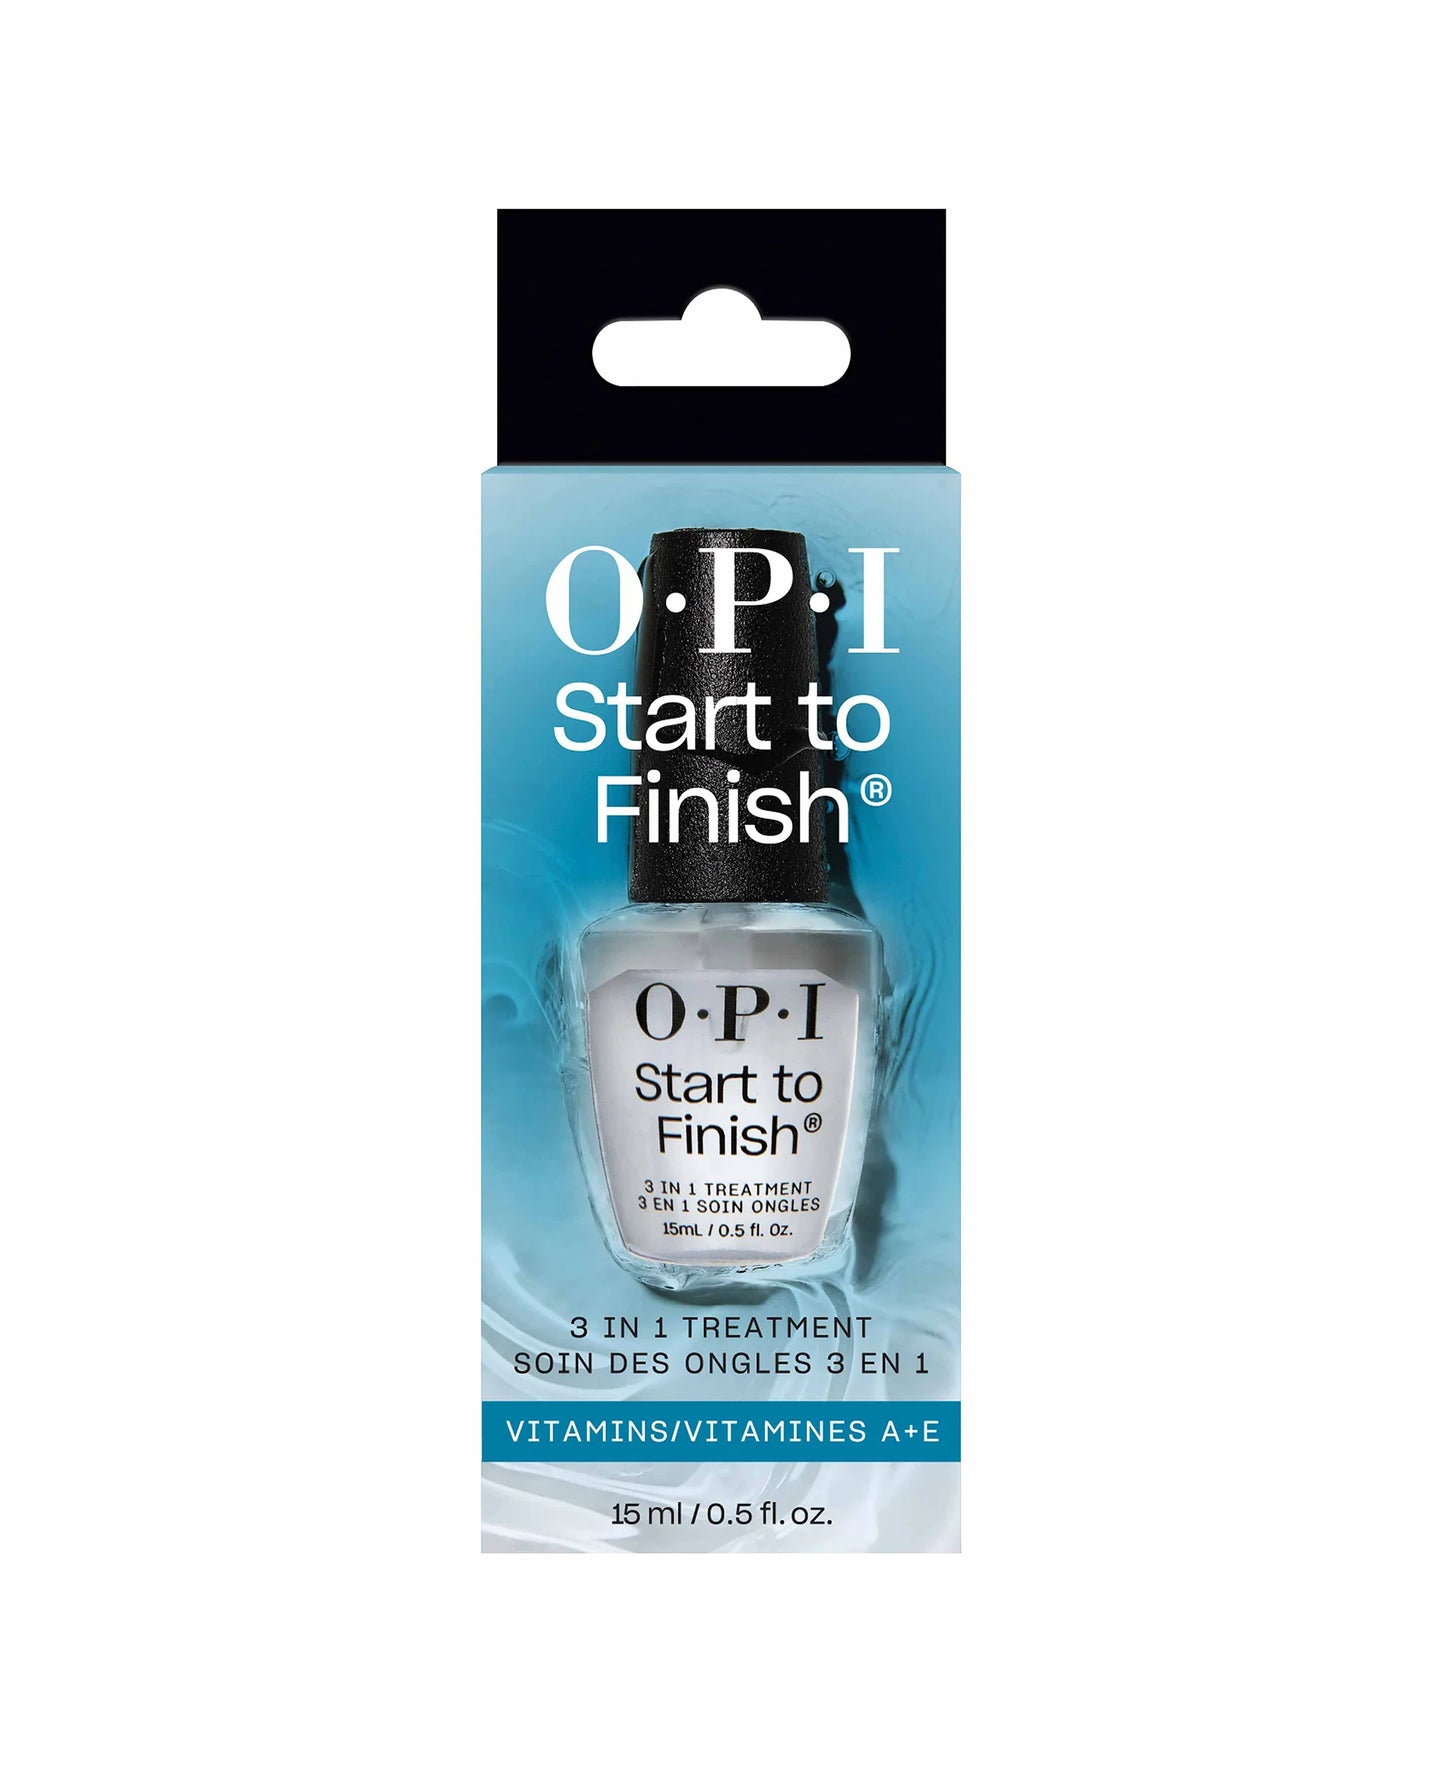 OPI Nail Polish Treatment, 3-in-1 Start to Finish Nail Formaldehyde Free Treatment, 0.5 Fl Oz